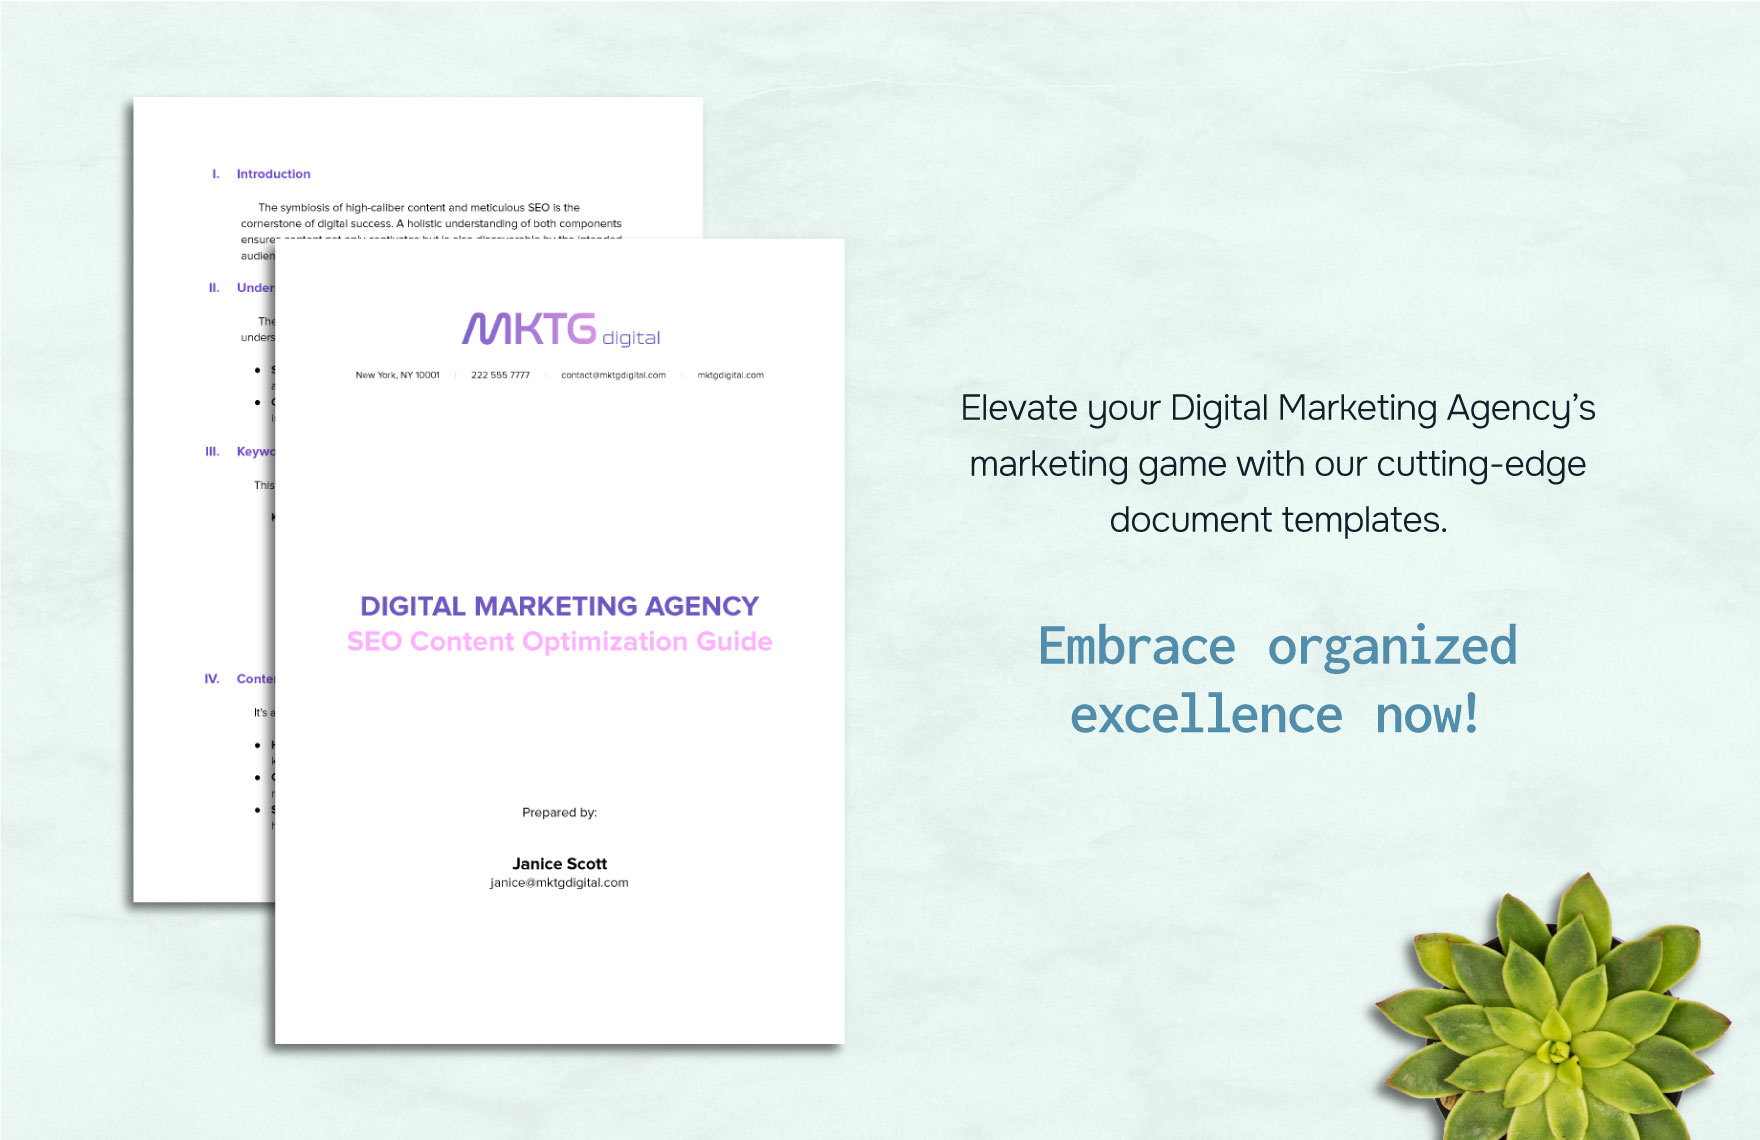 Digital Marketing Agency SEO Content Optimization Guide Template